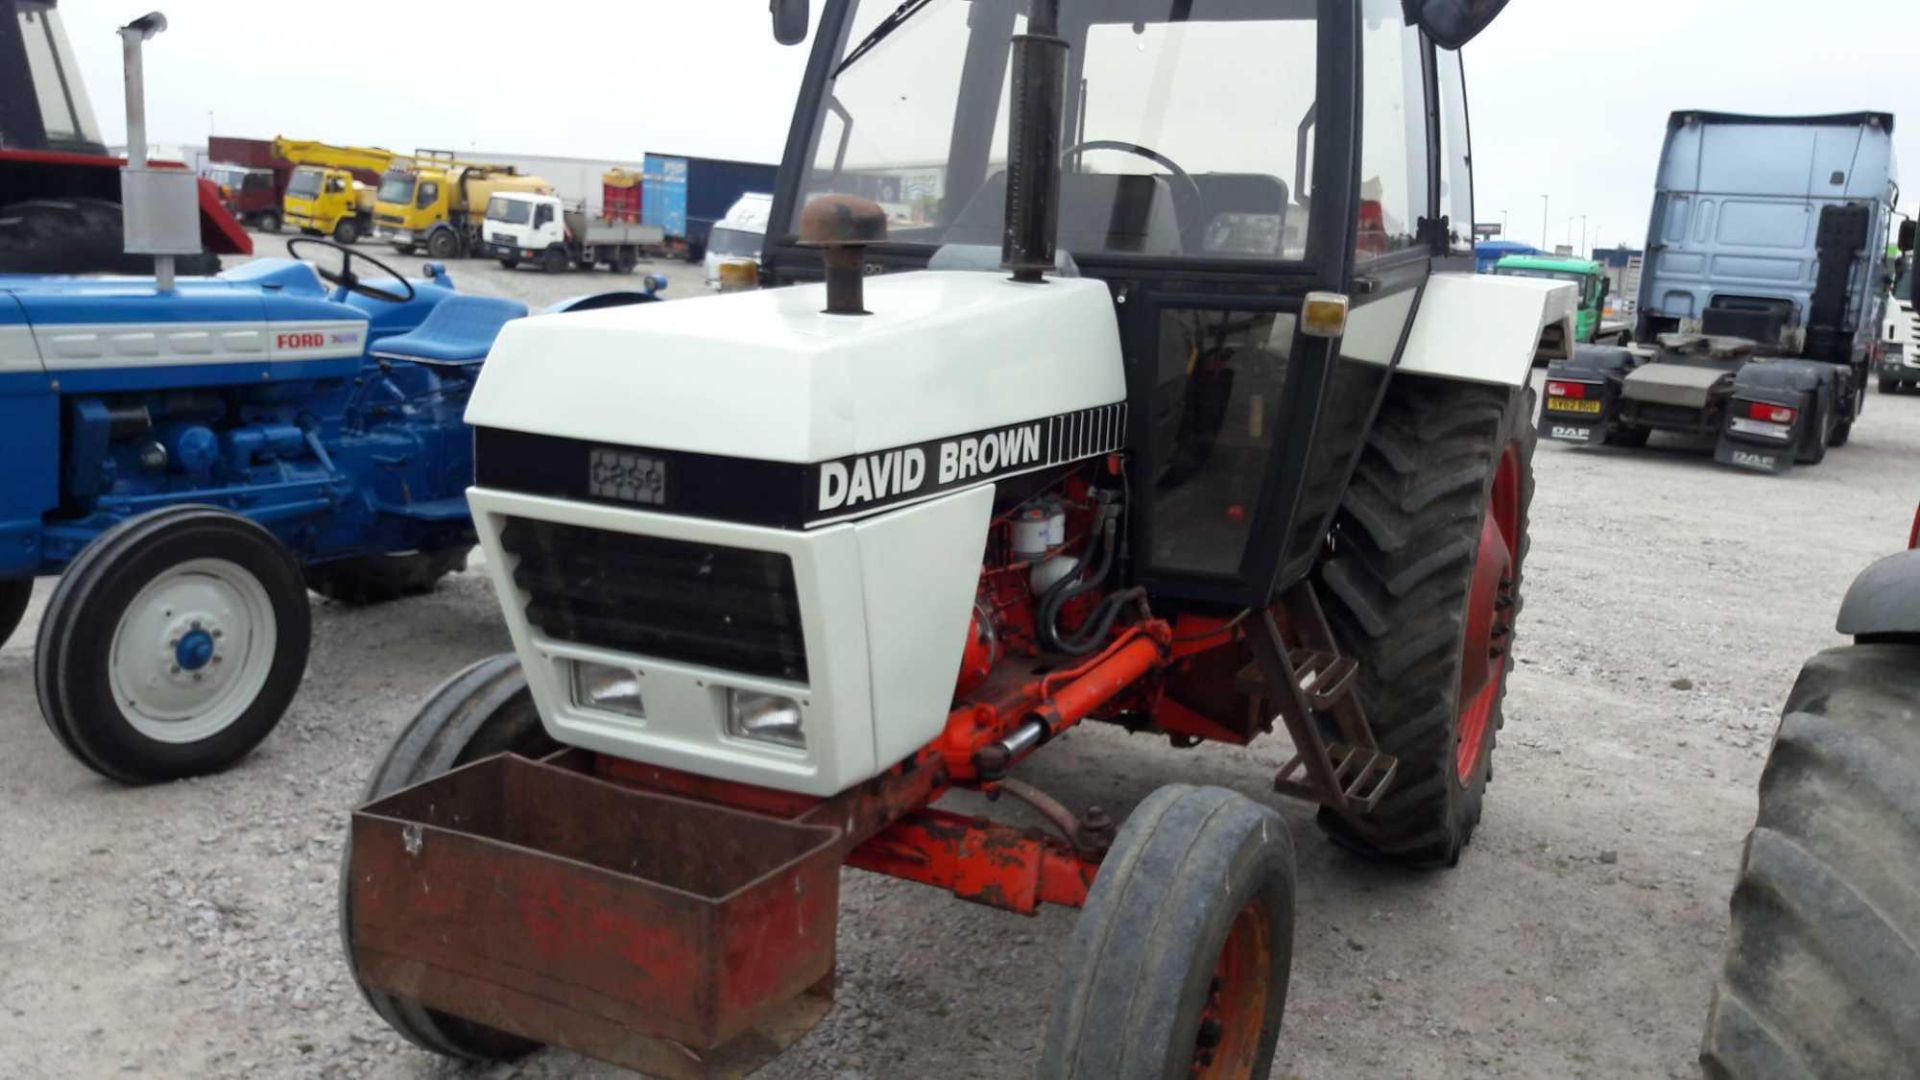 David Brown 1390 - 0cc Tractor - Image 2 of 5